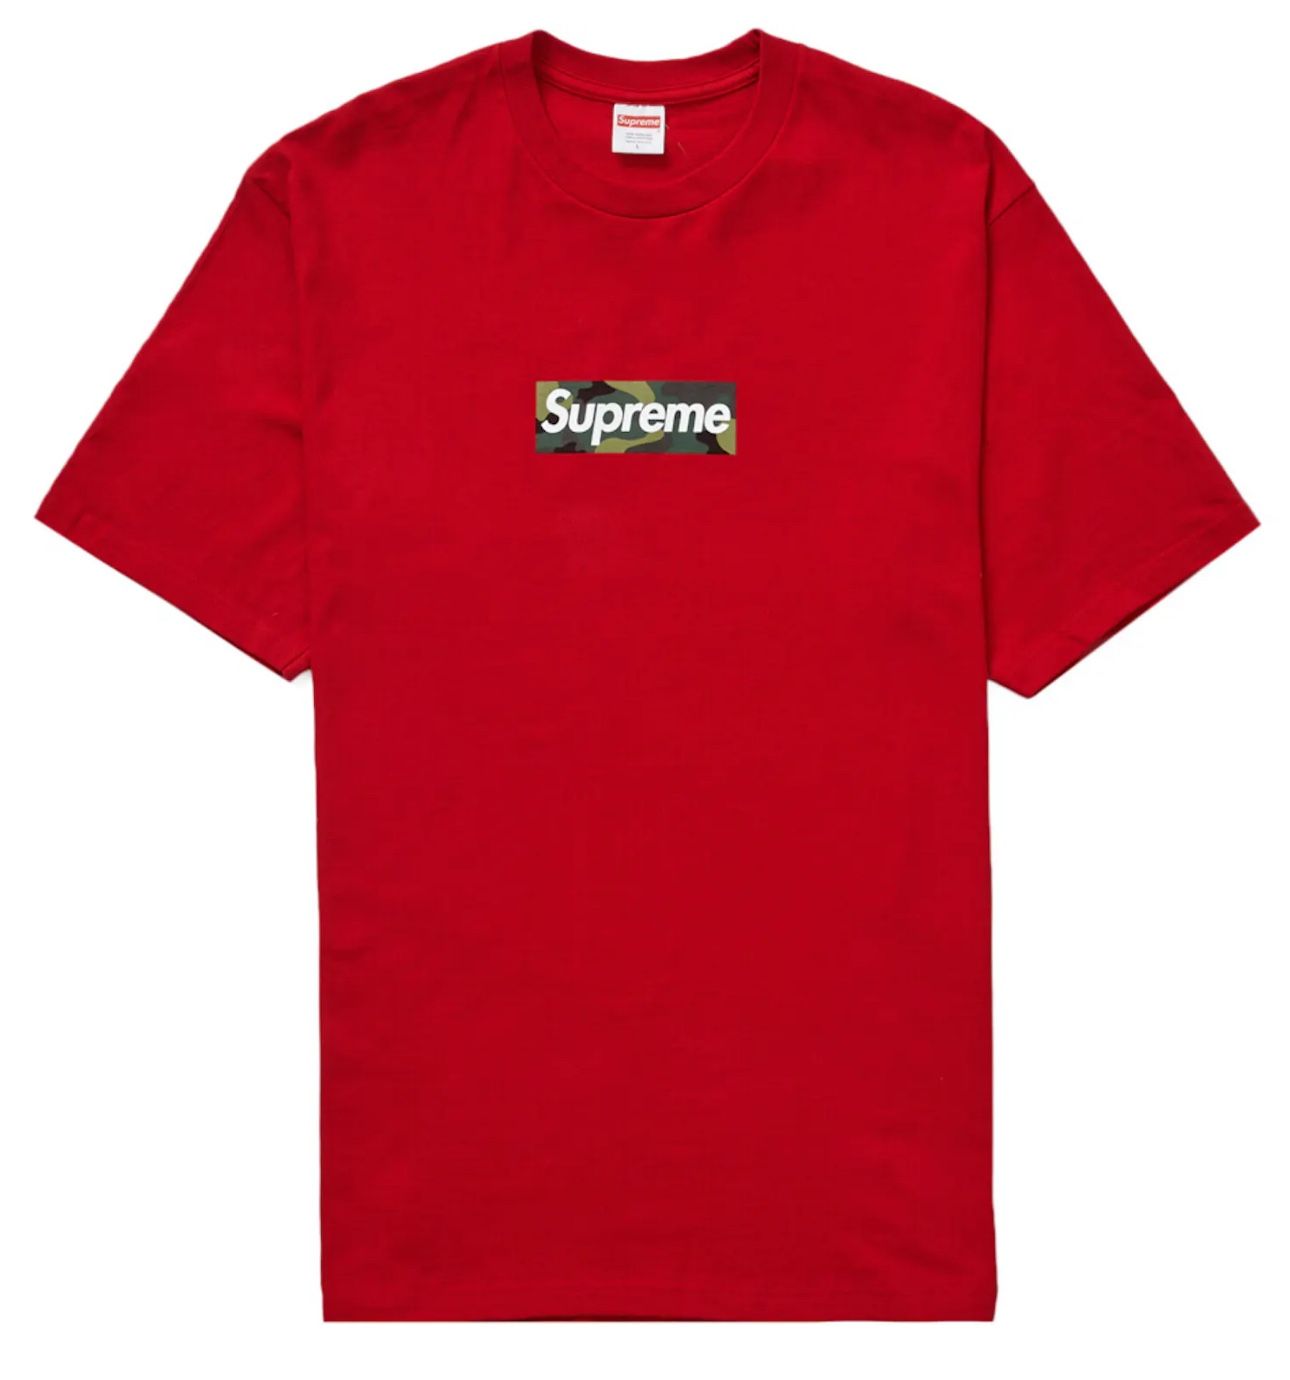 Size M - Supreme Box Logo Tee Red (FW23) - $80